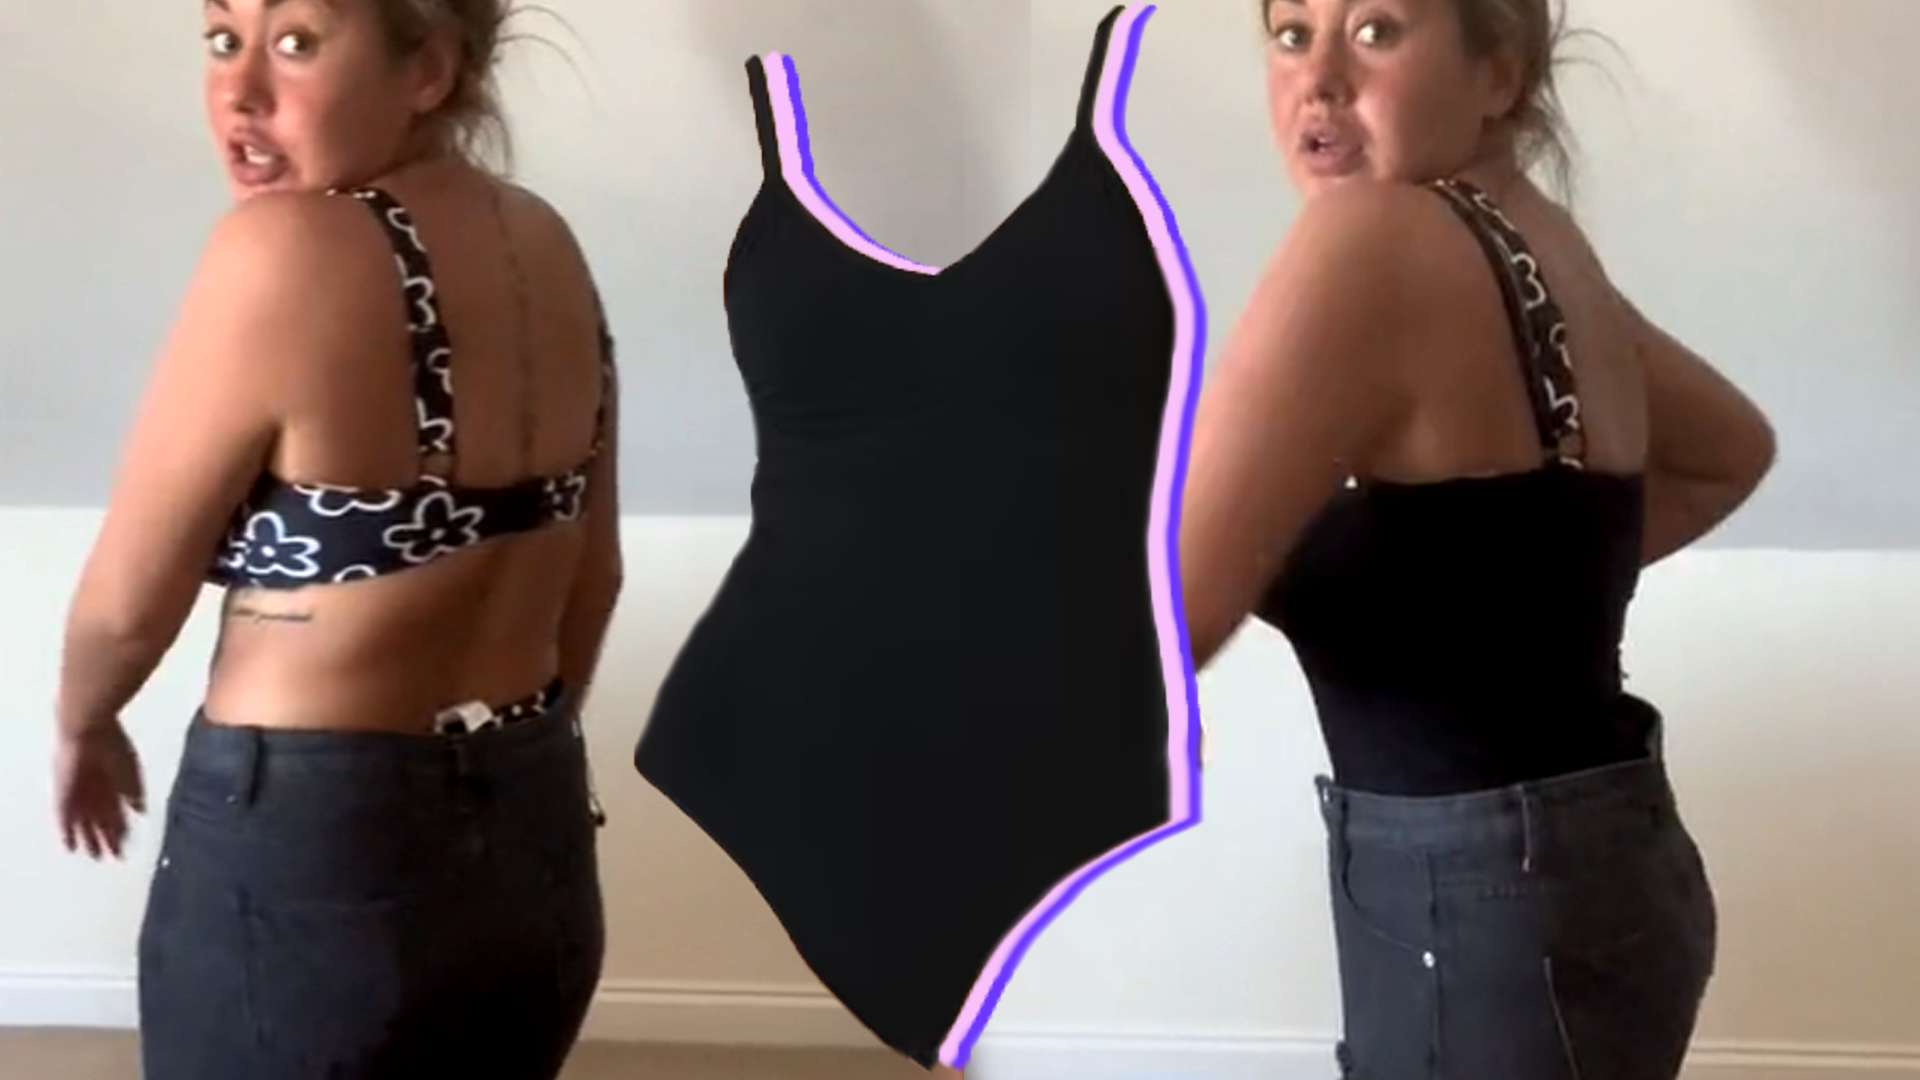 Kmart bodysuit vs our Tank Bodysuit #kmartbodysuit #clothingreview #bo